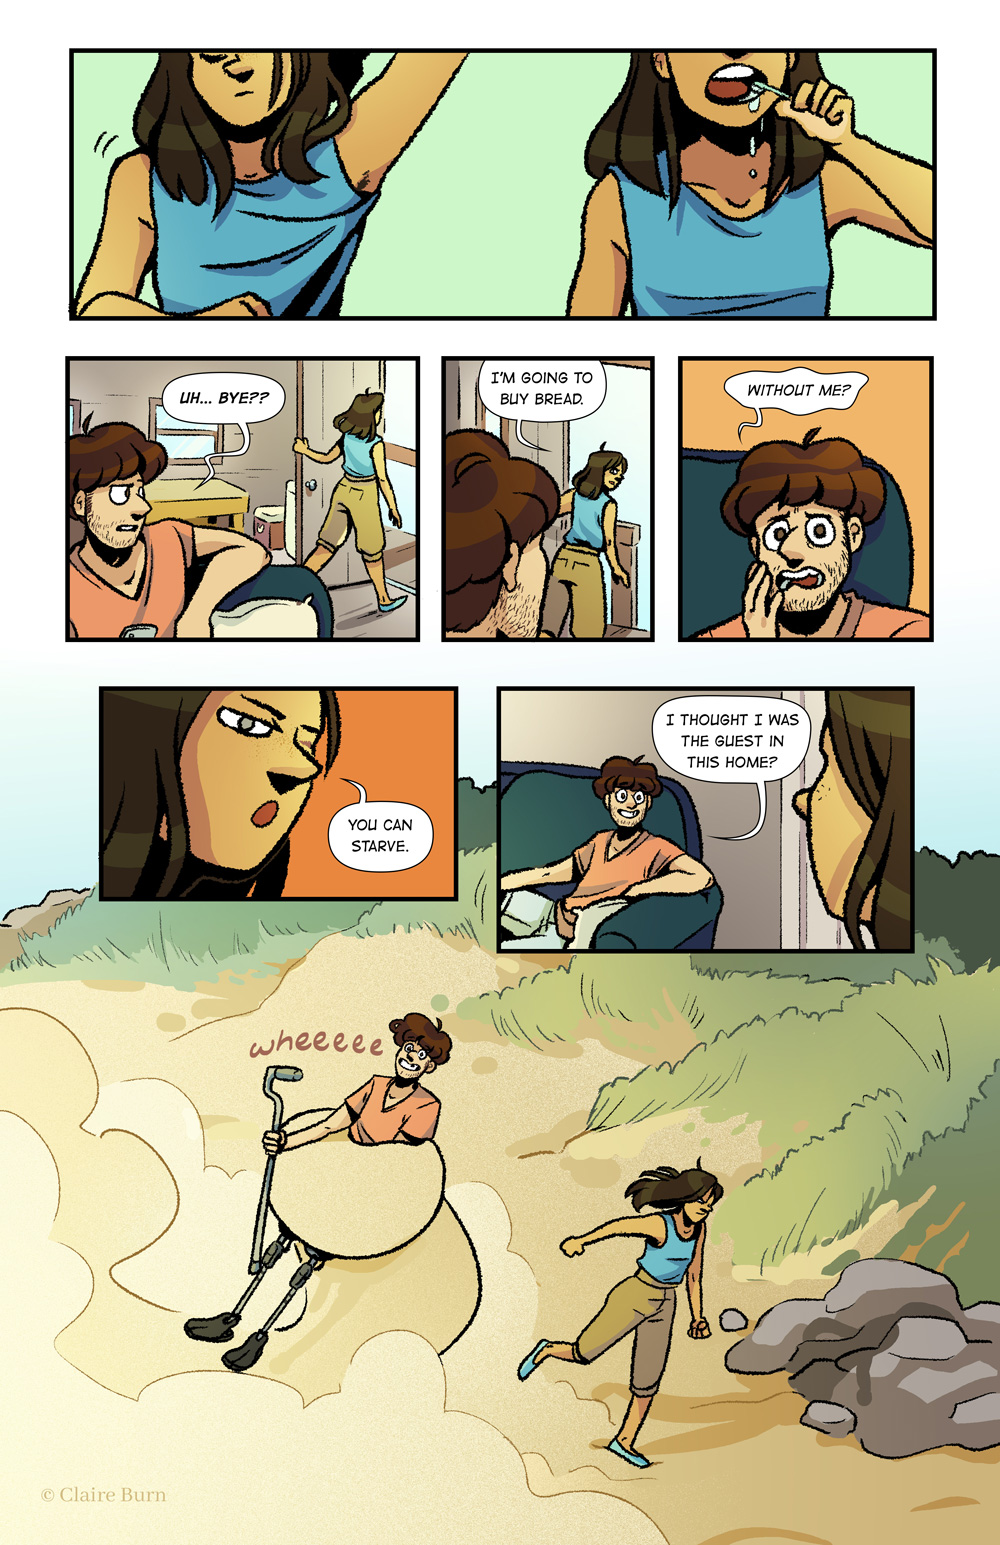 comic page 5